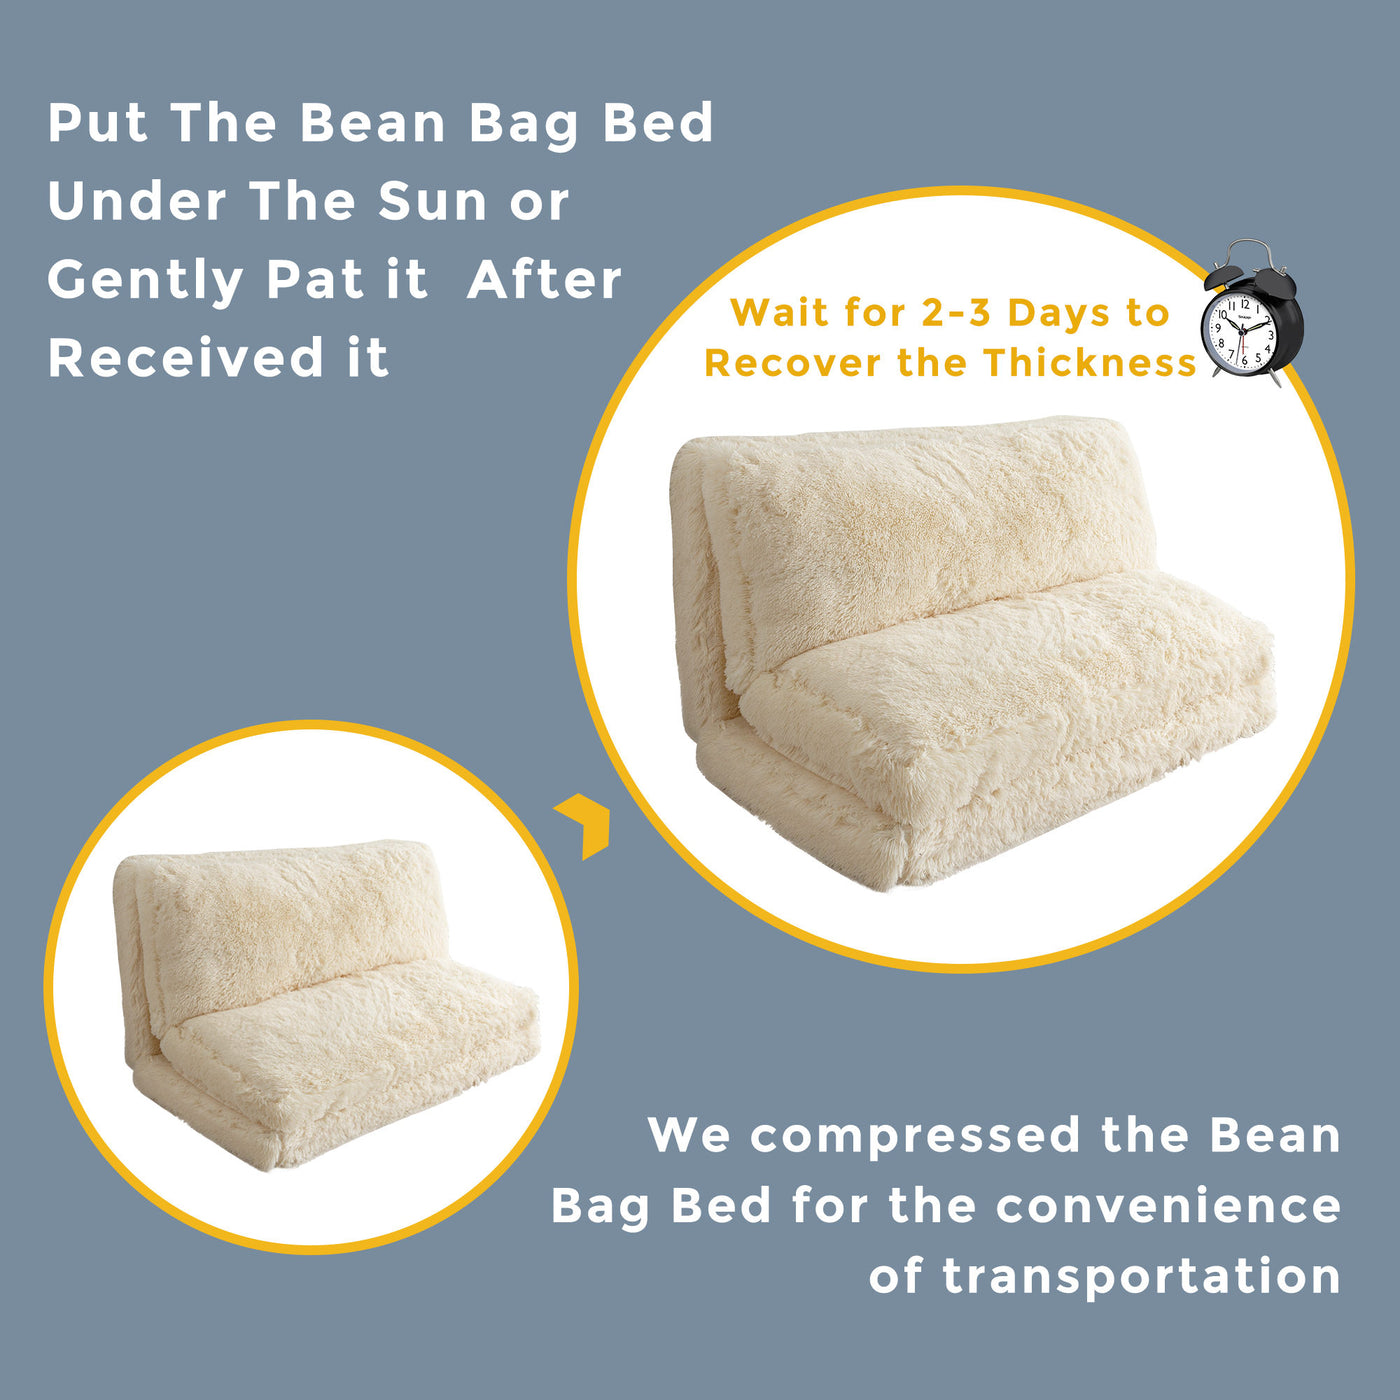 MAXYOYO Bean Bag Folding Floor Sofa Bed, Faux Fur Foam Filling Wall Couch Sleeper Chairs, Beige